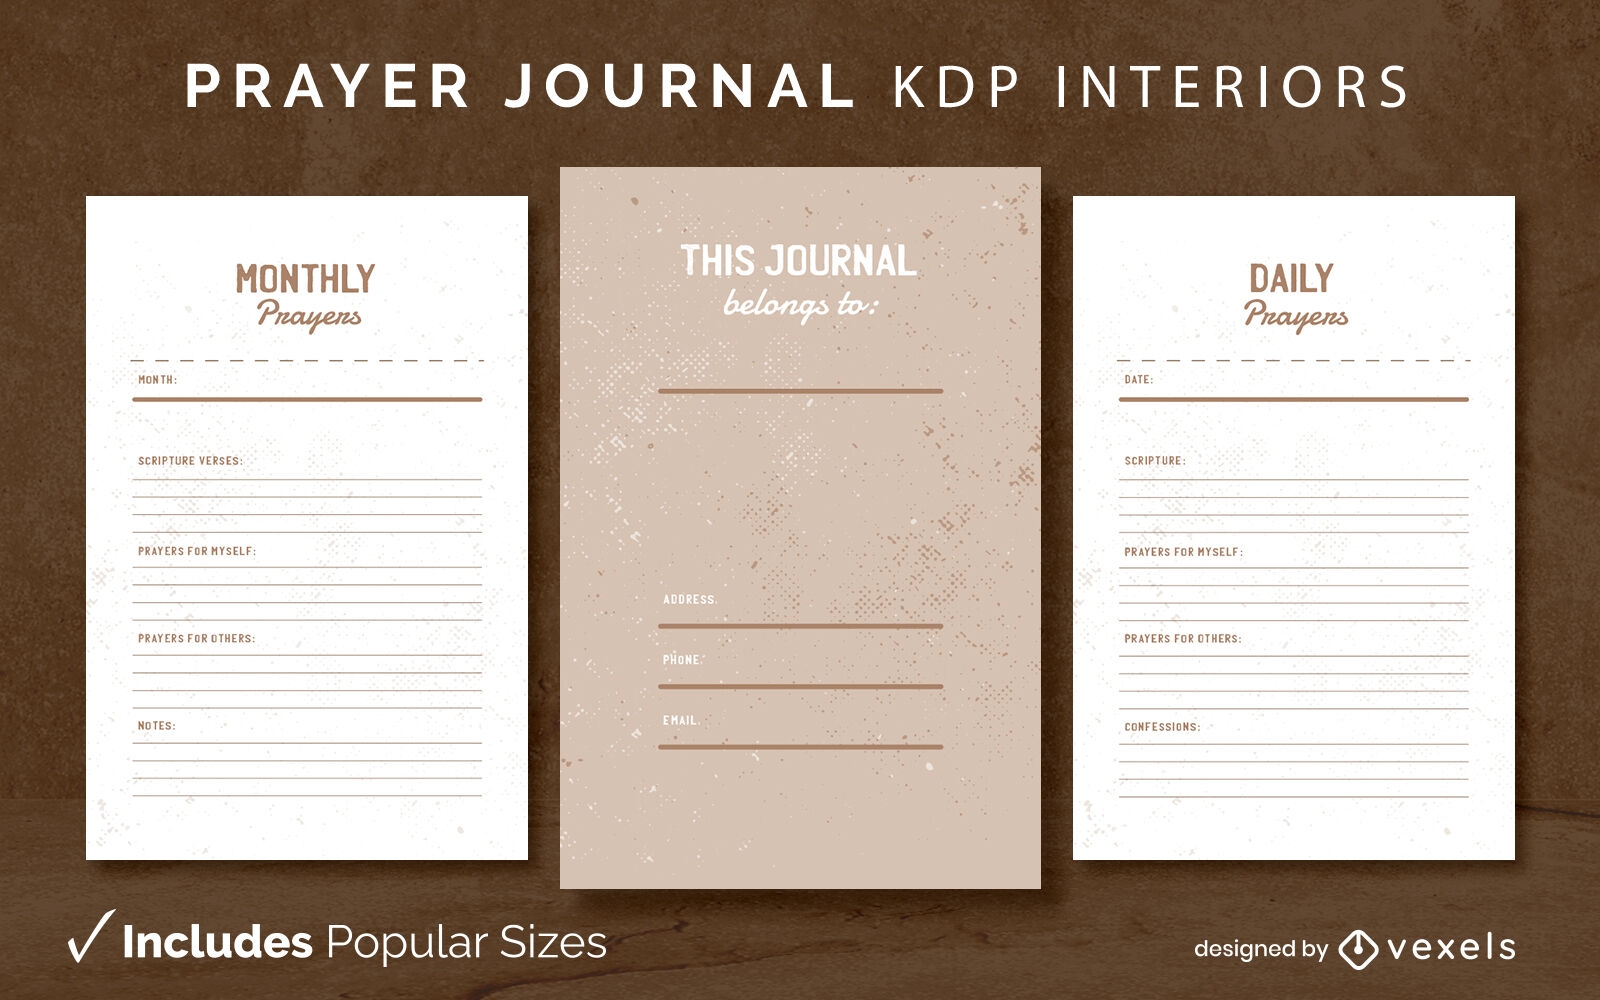 Basic prayer journal design template KDP